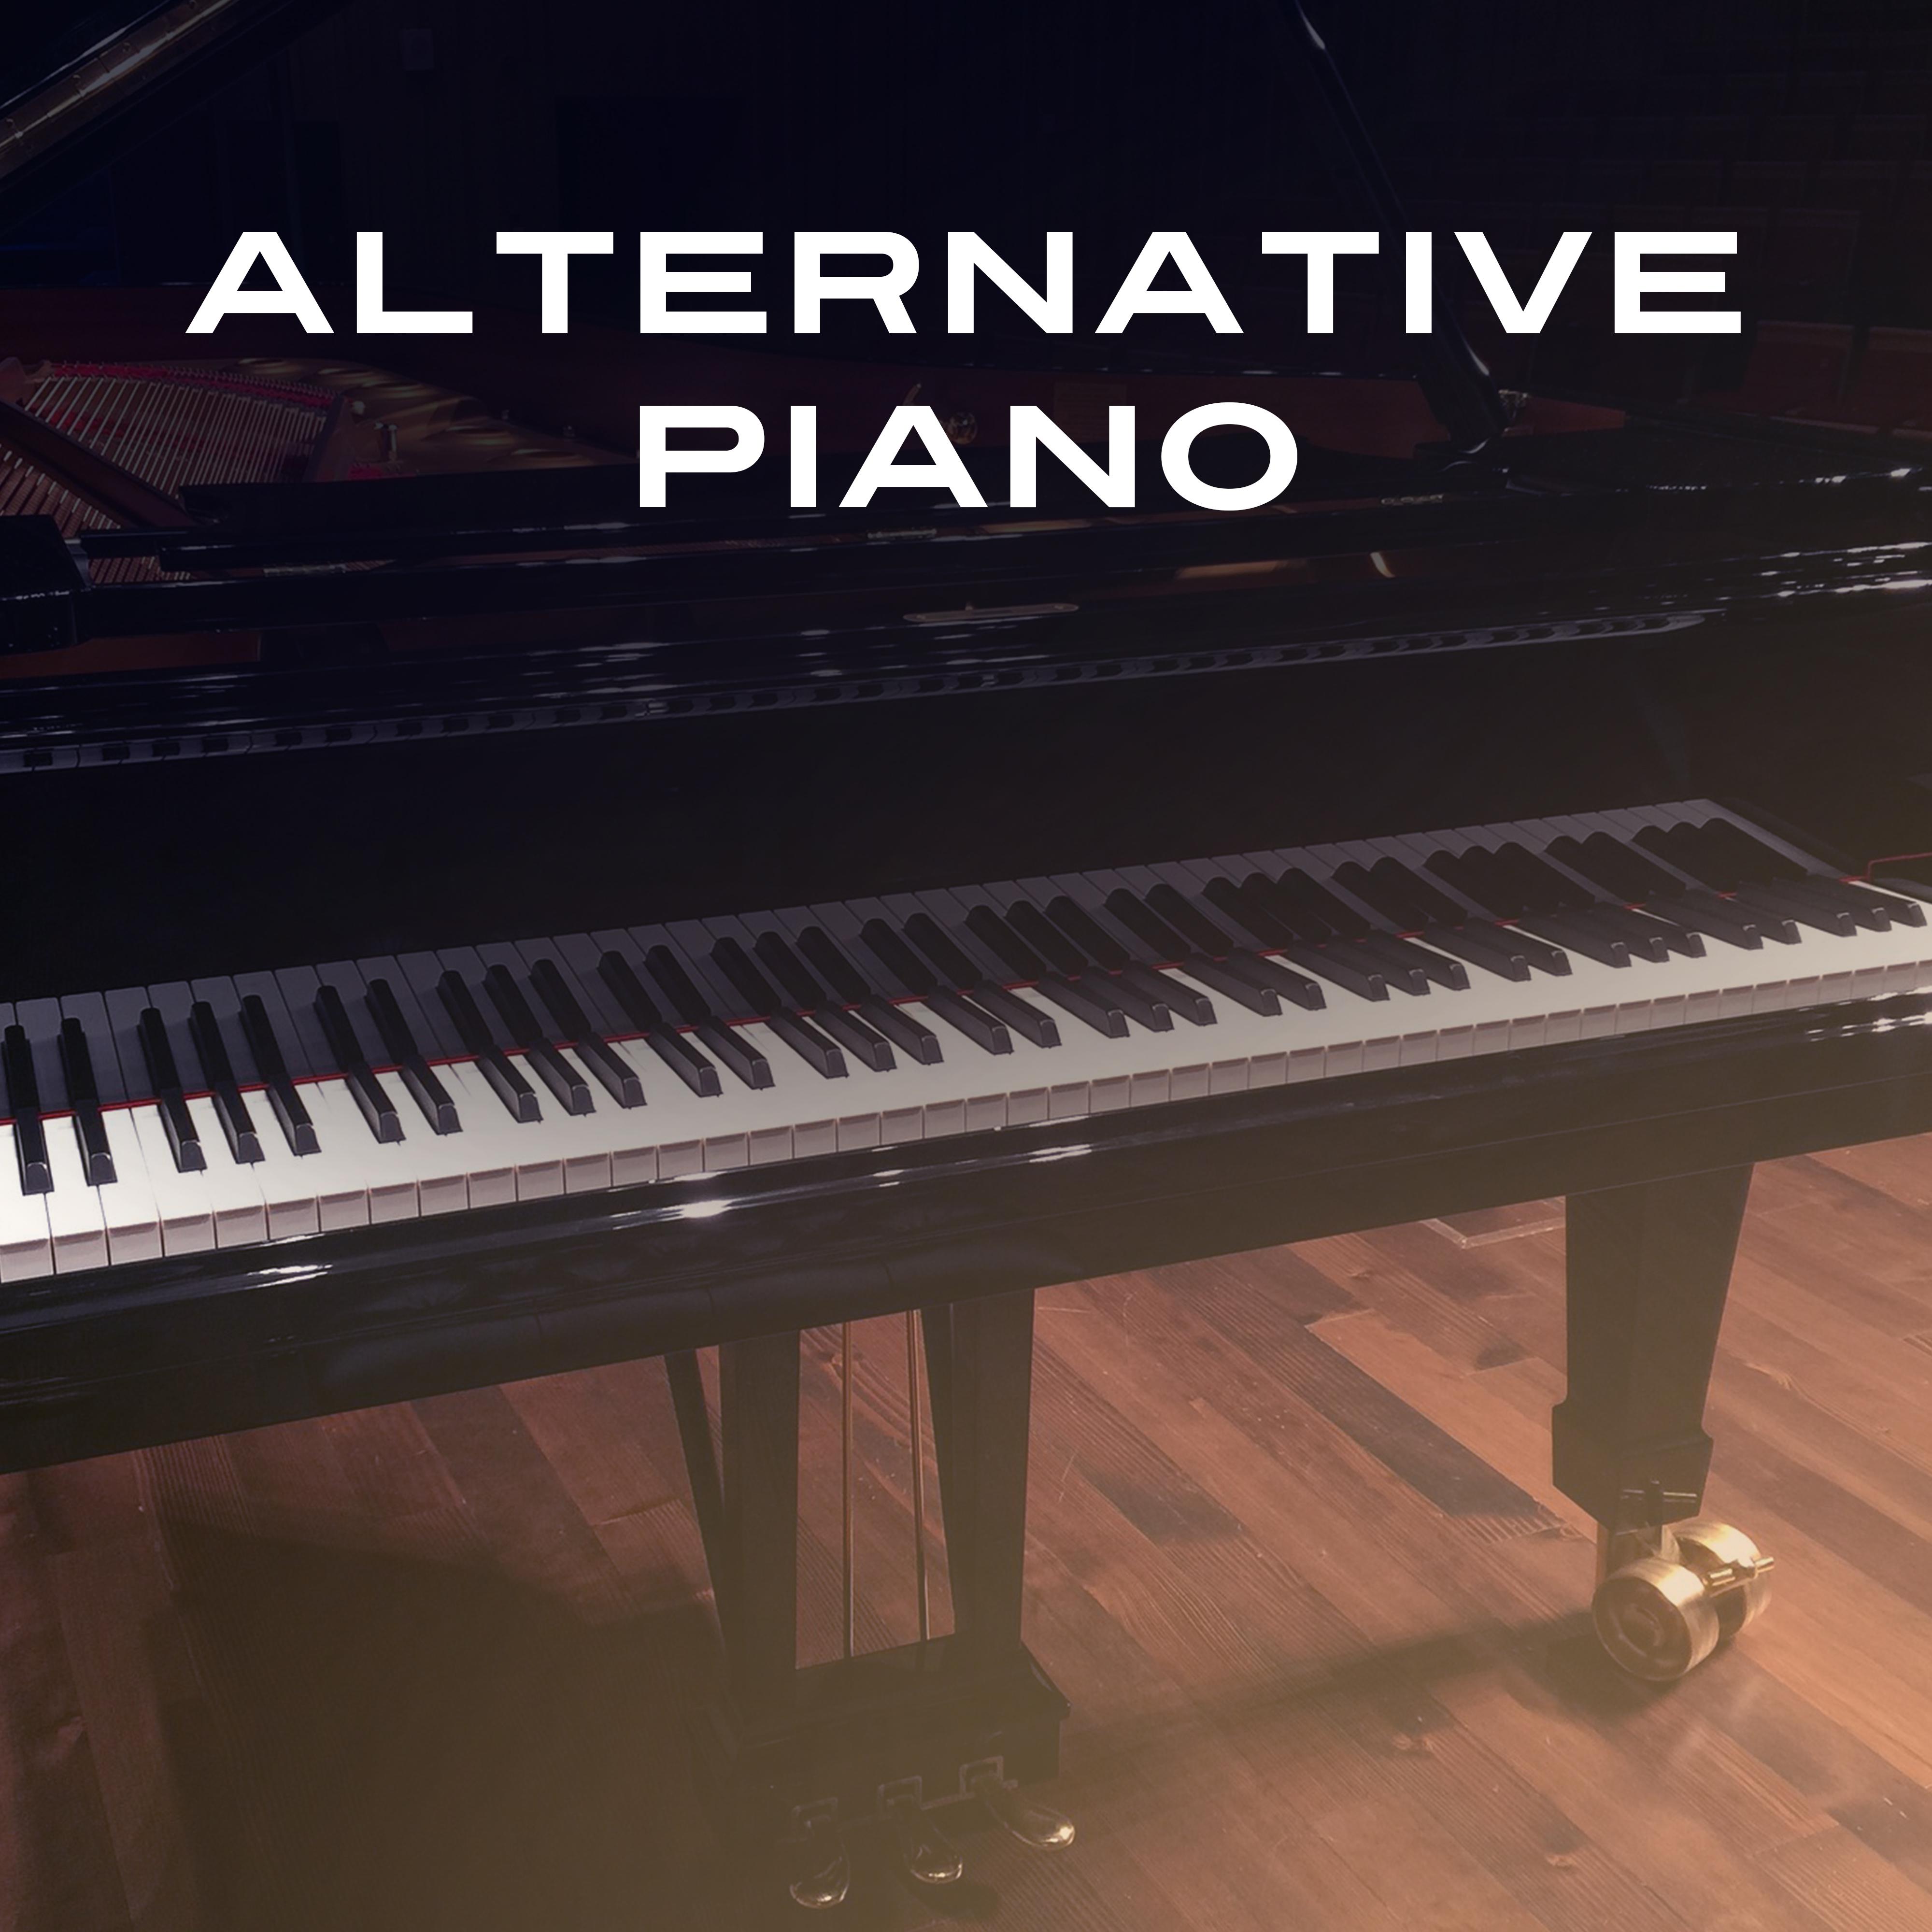 Alternative Piano  Solo Piano, Instrumental Jazz, Ambient Music, Relaxed Jazz